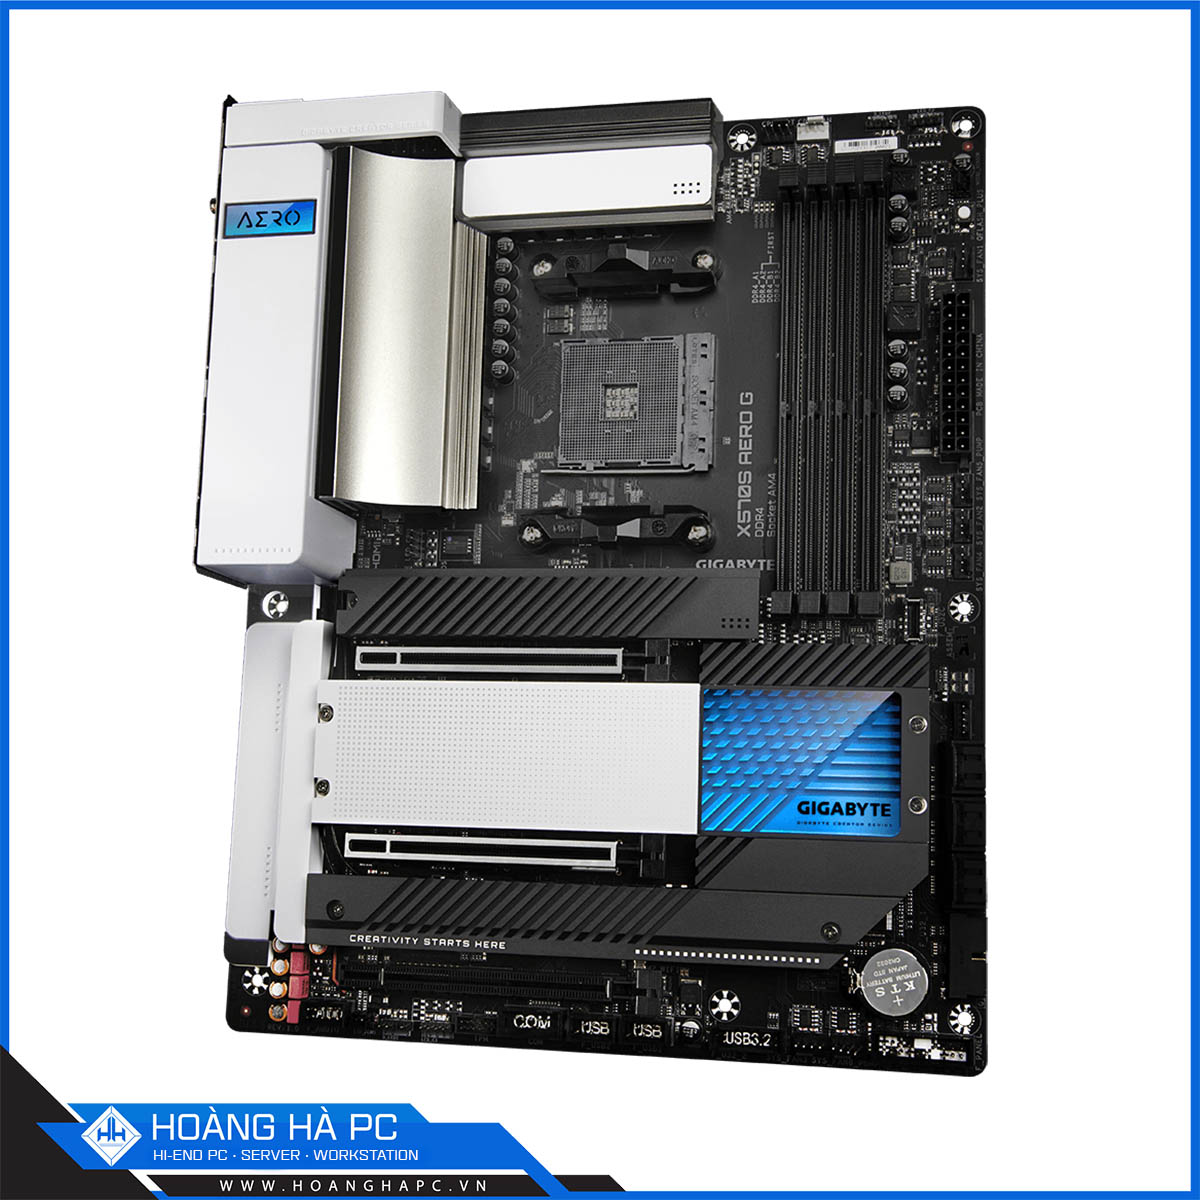 Mainboard Gigabyte X570S AERO G (AMD X570, Socket AM4, ATX, 4 Khe Cắm Ram DDR4)